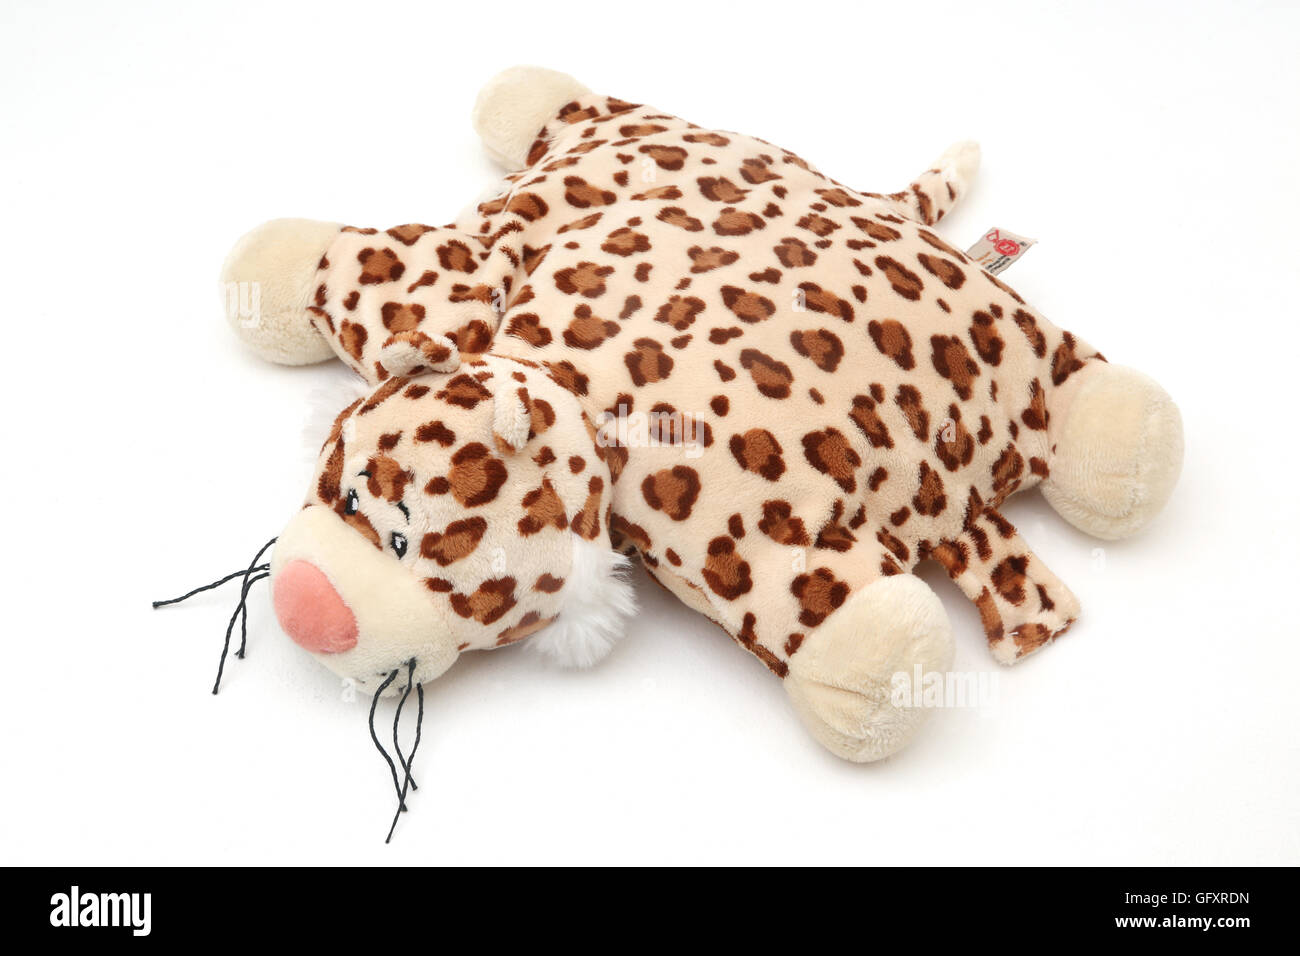 leopard pillow pet